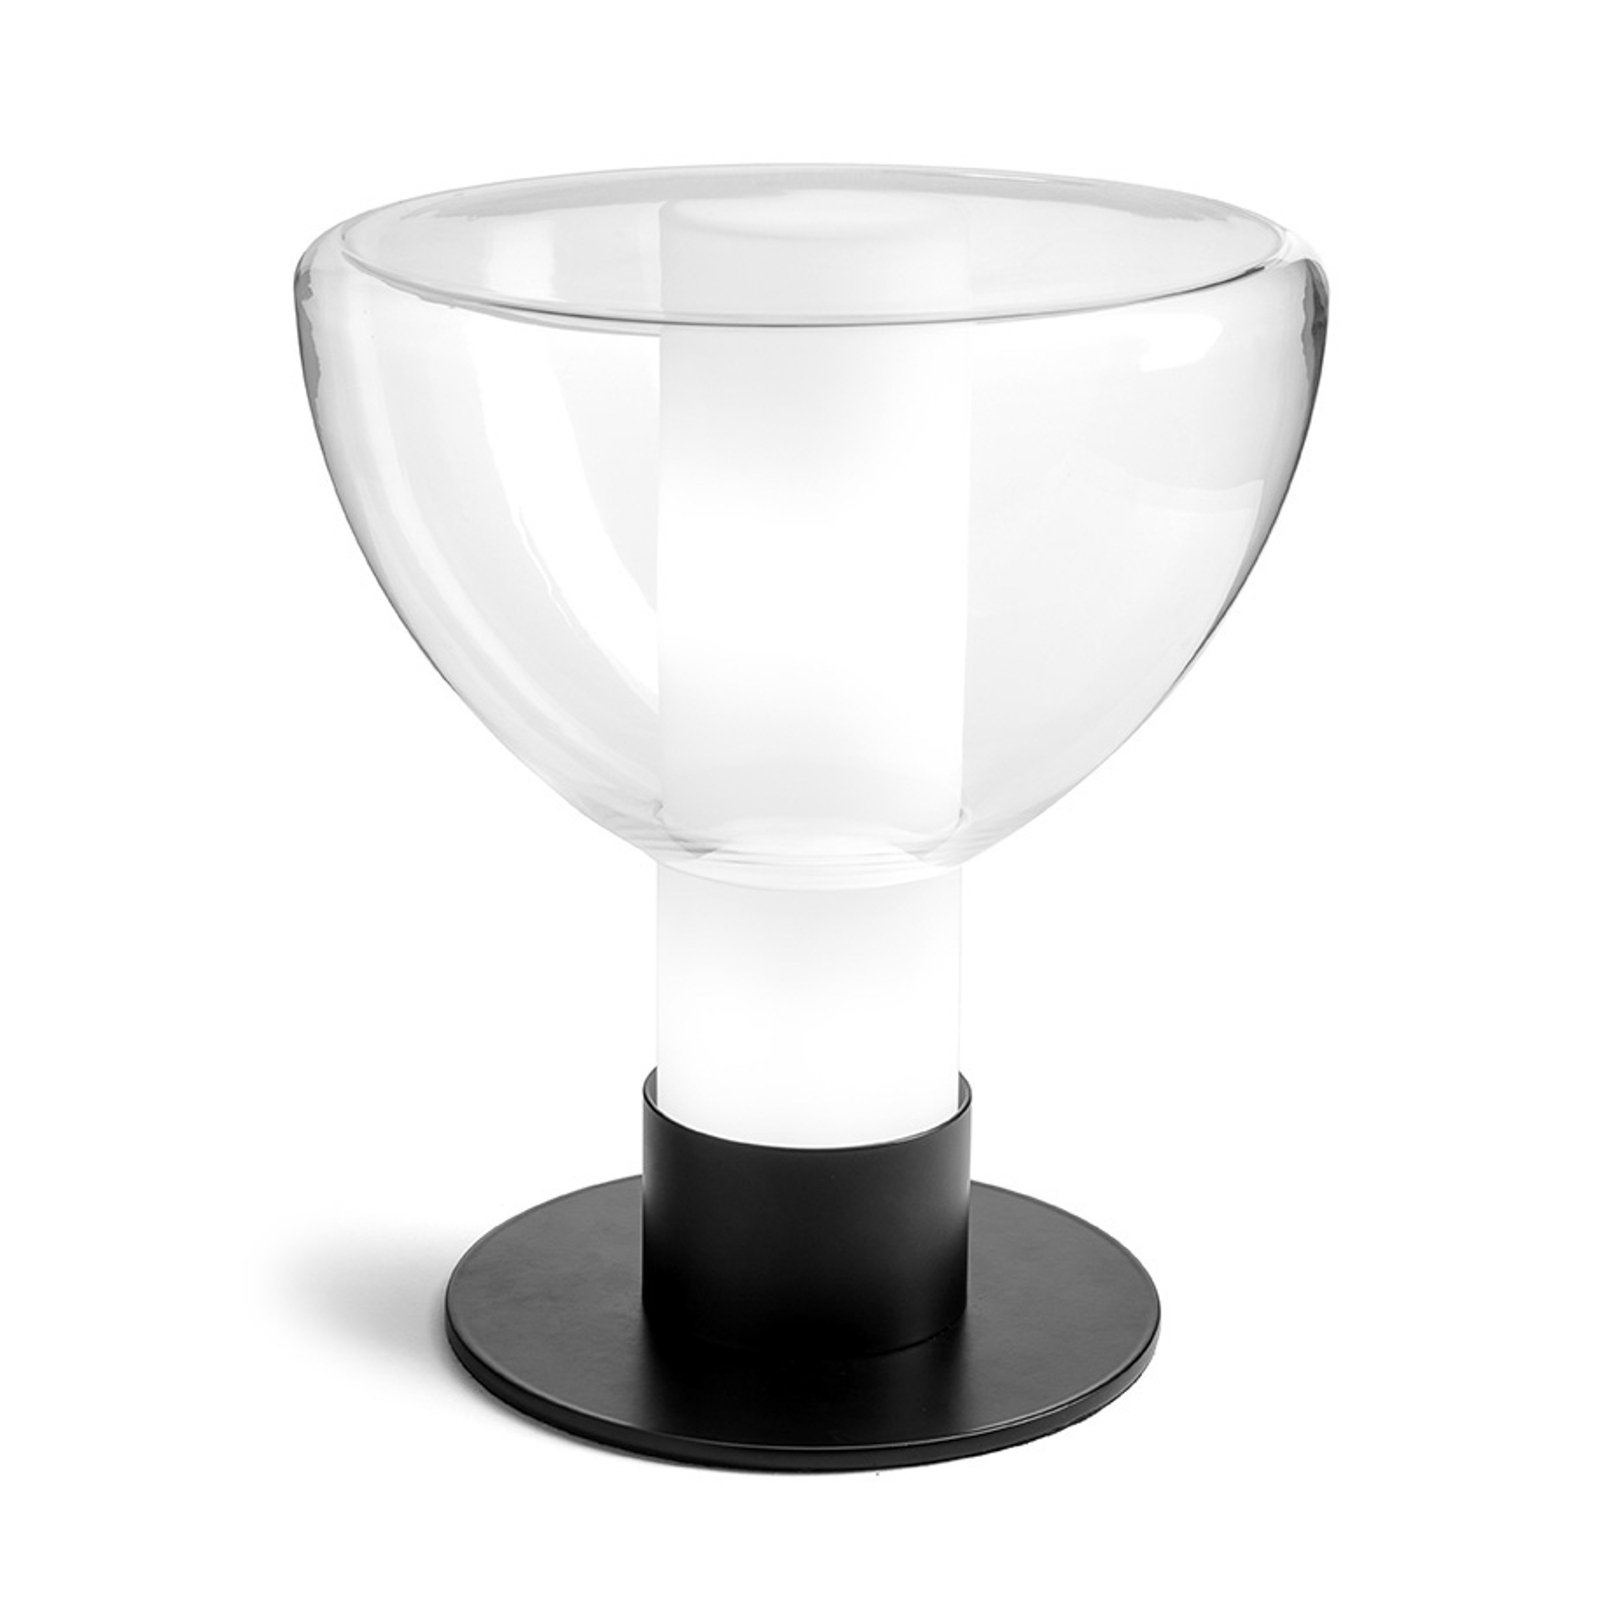 Plato glass table lamp, handblown